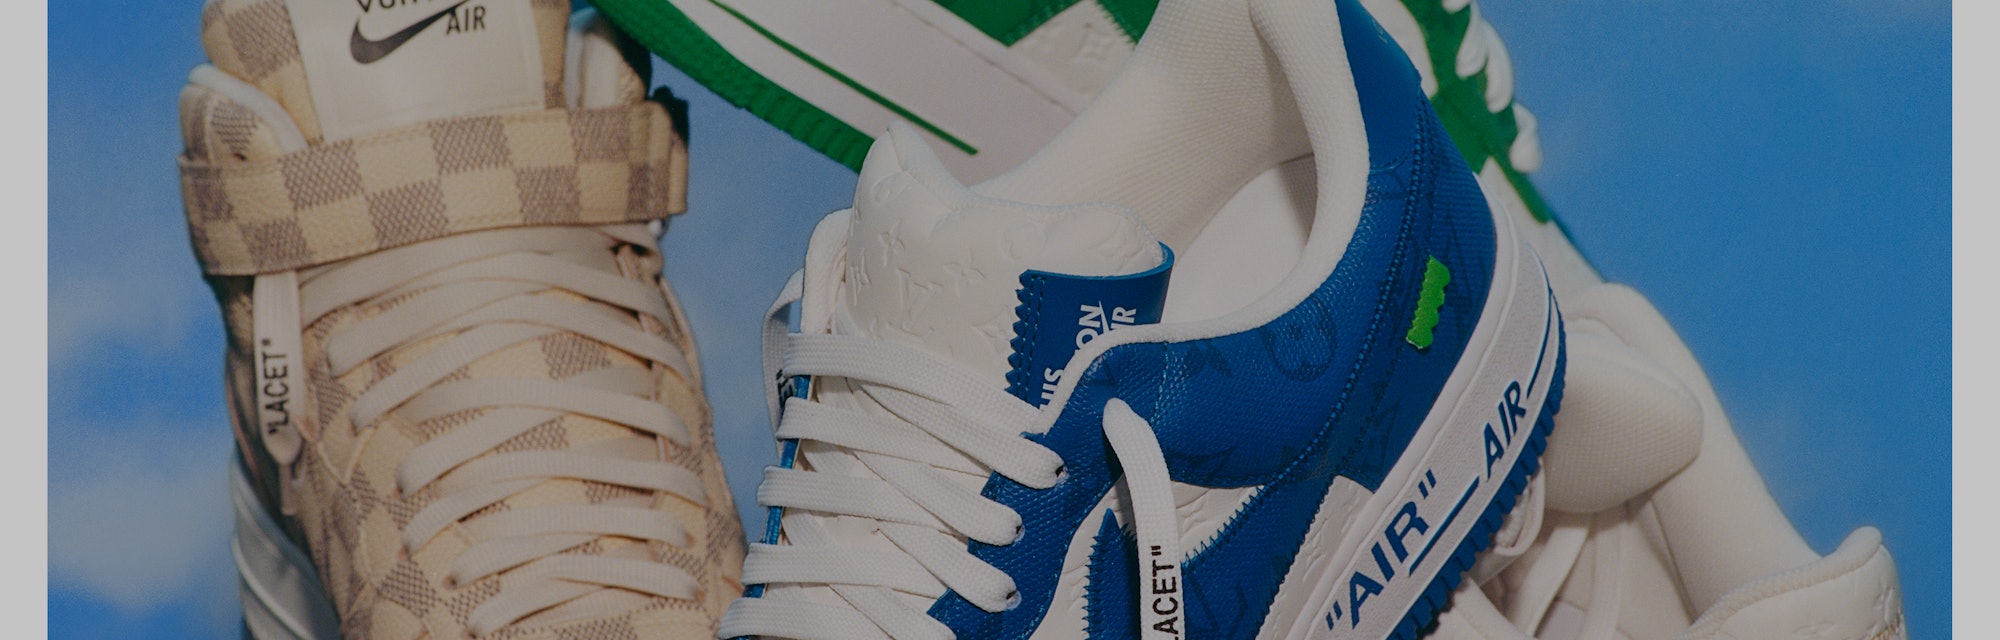 Virgil Abloh's Louis Vuitton x Nike Air Force 1 sneaker is